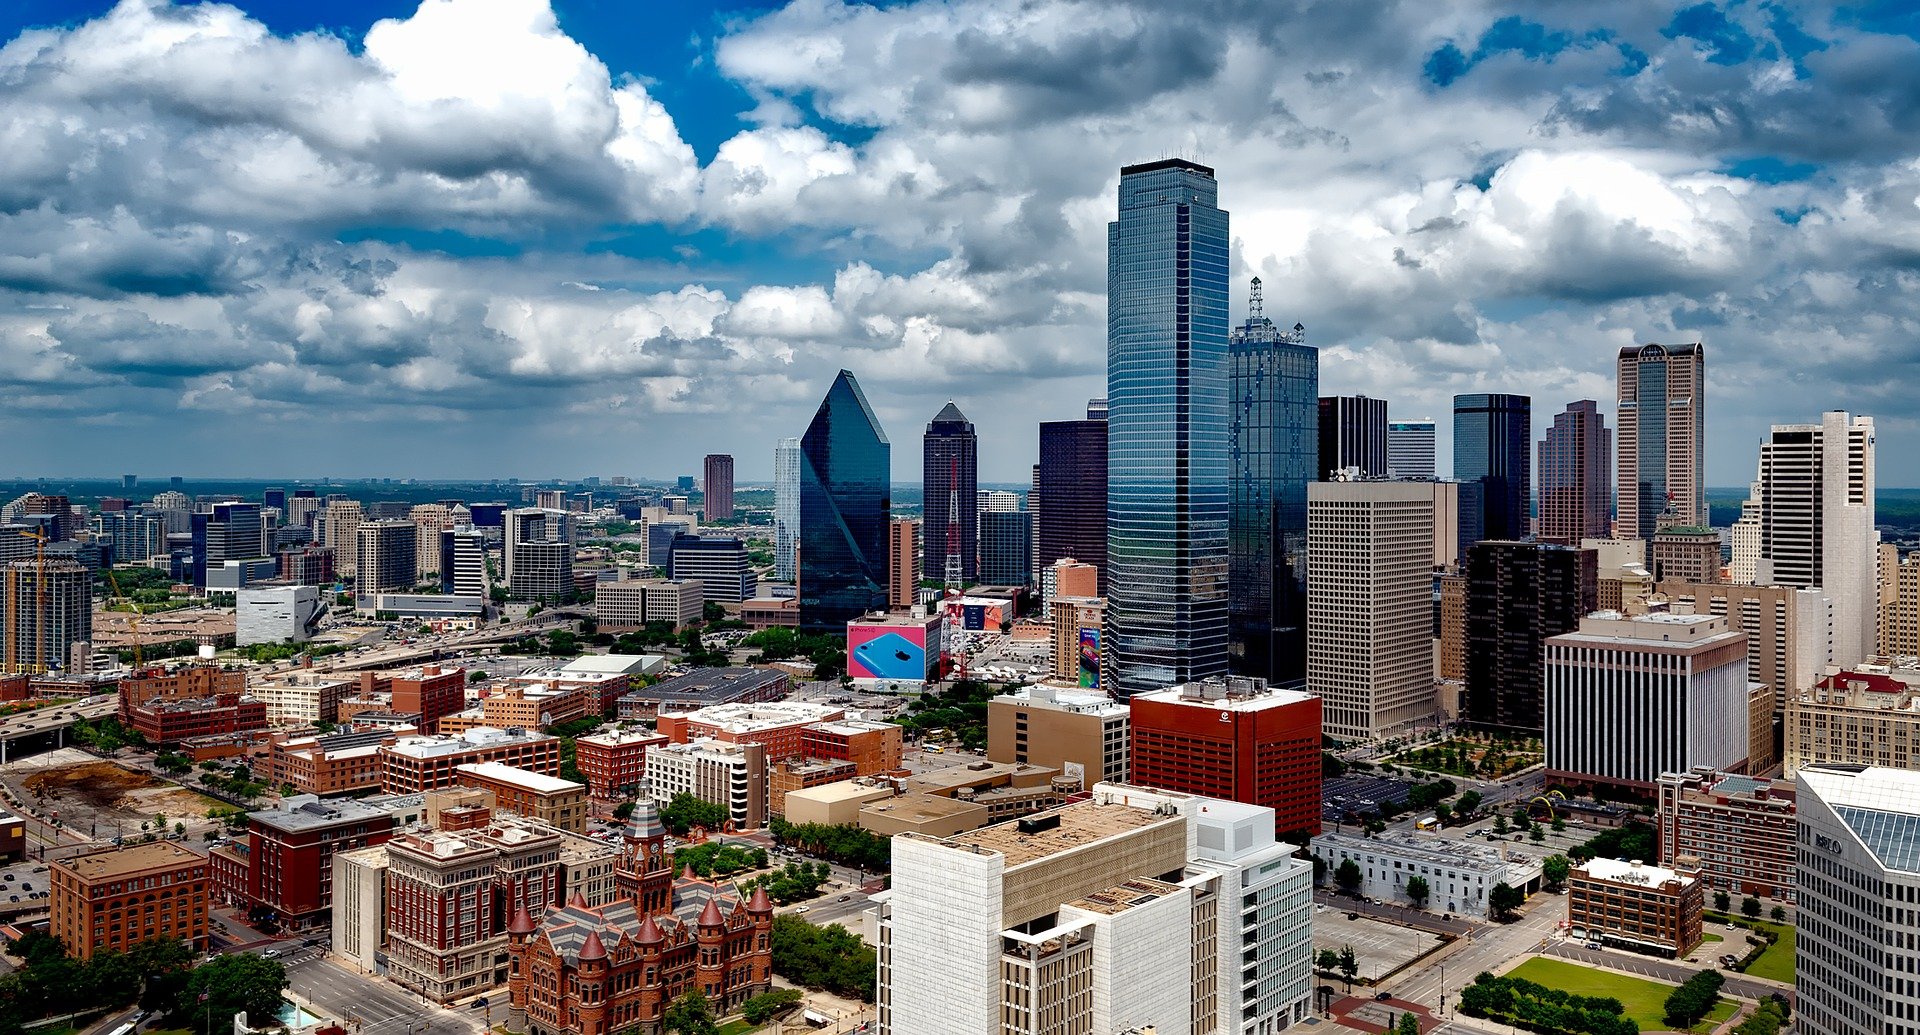 #Dallas’ star rising as a tech capital, especially during pandemic